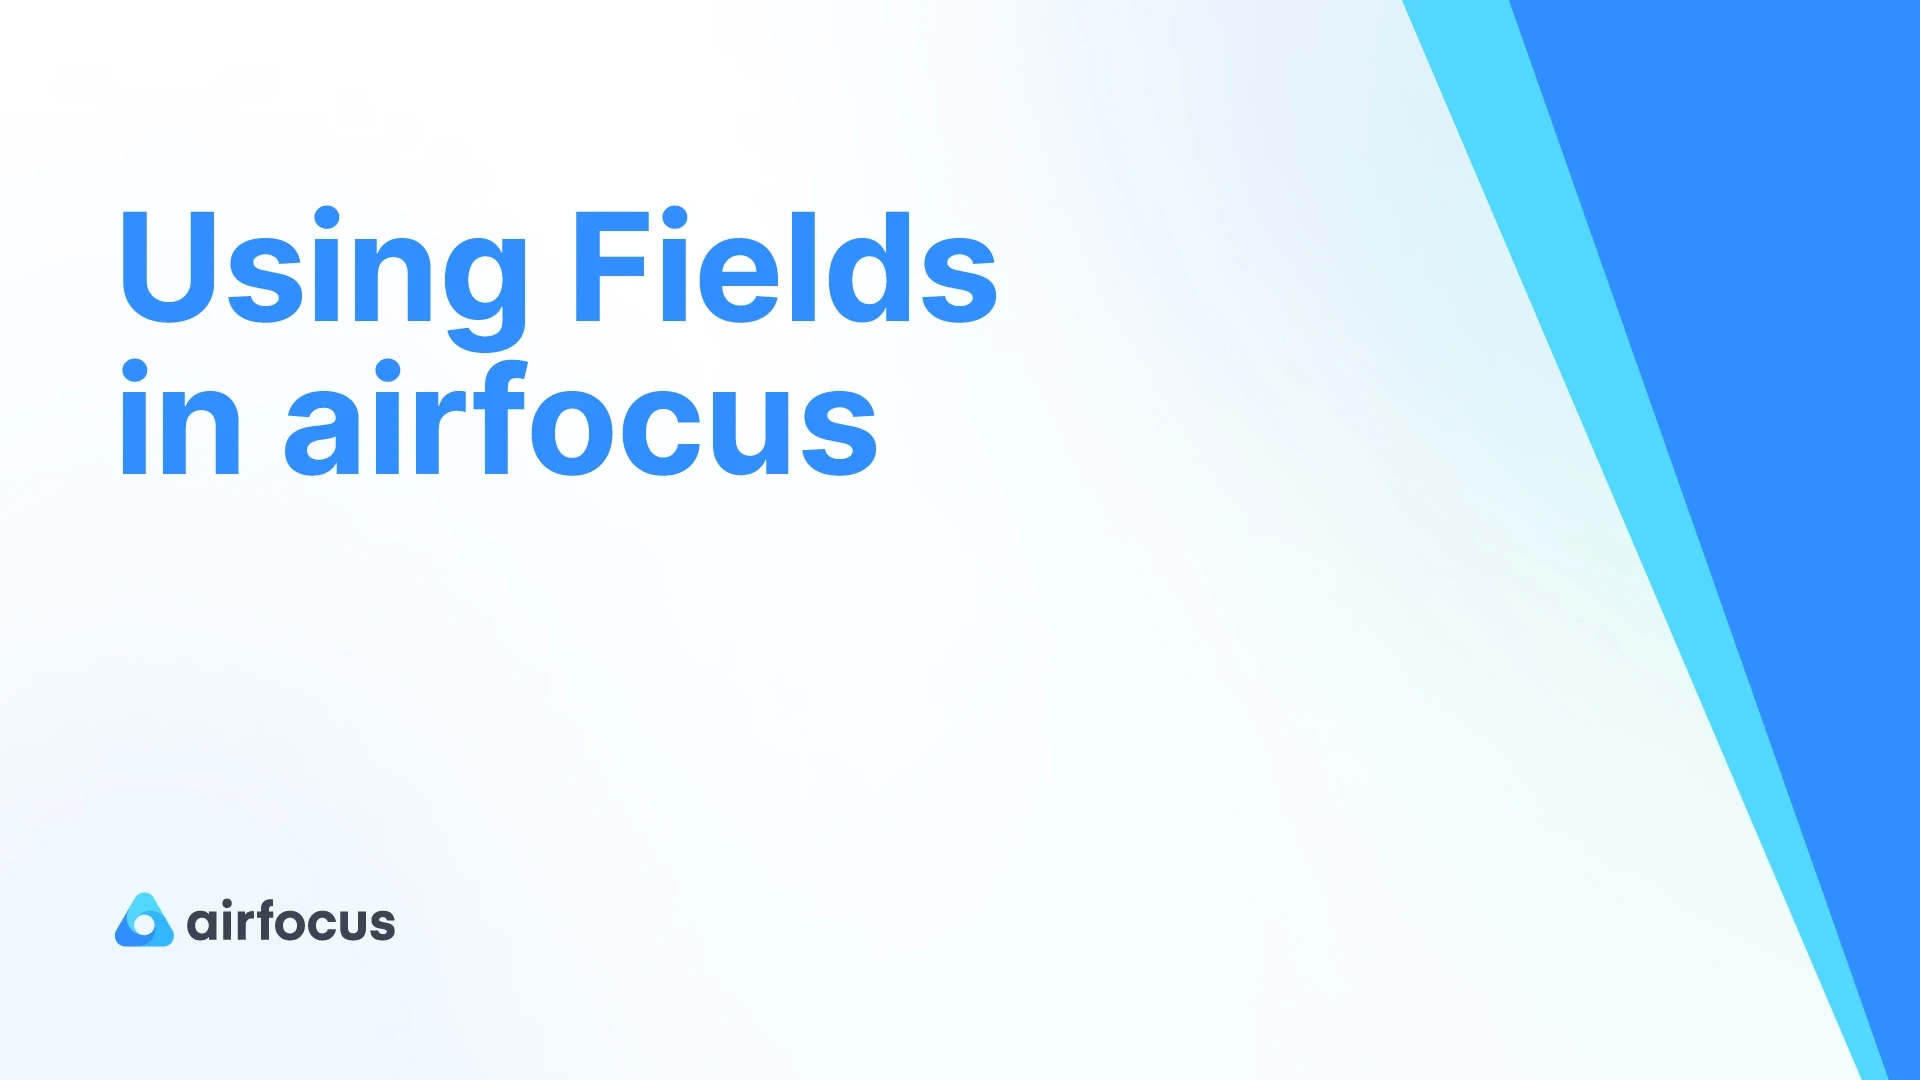 Using Fields in airfocus